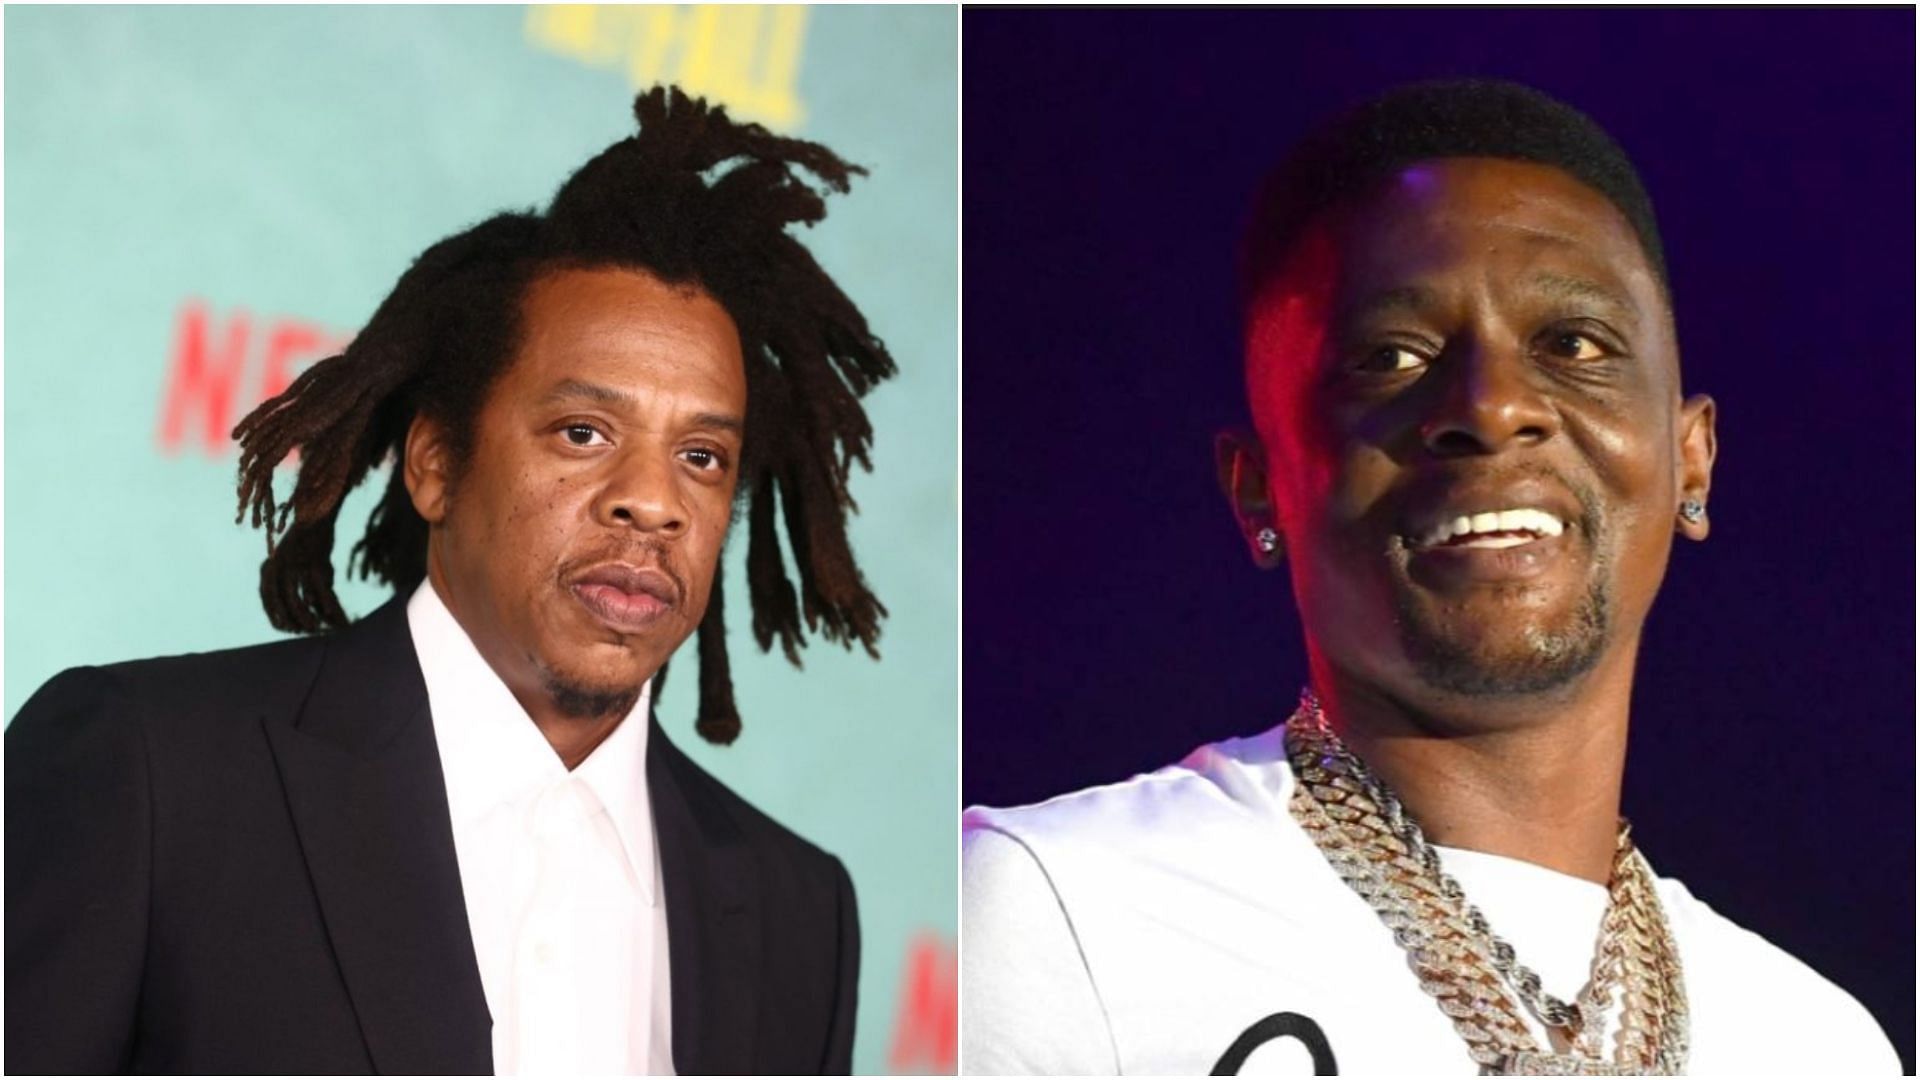 American rapper Boosie has called Jay Z